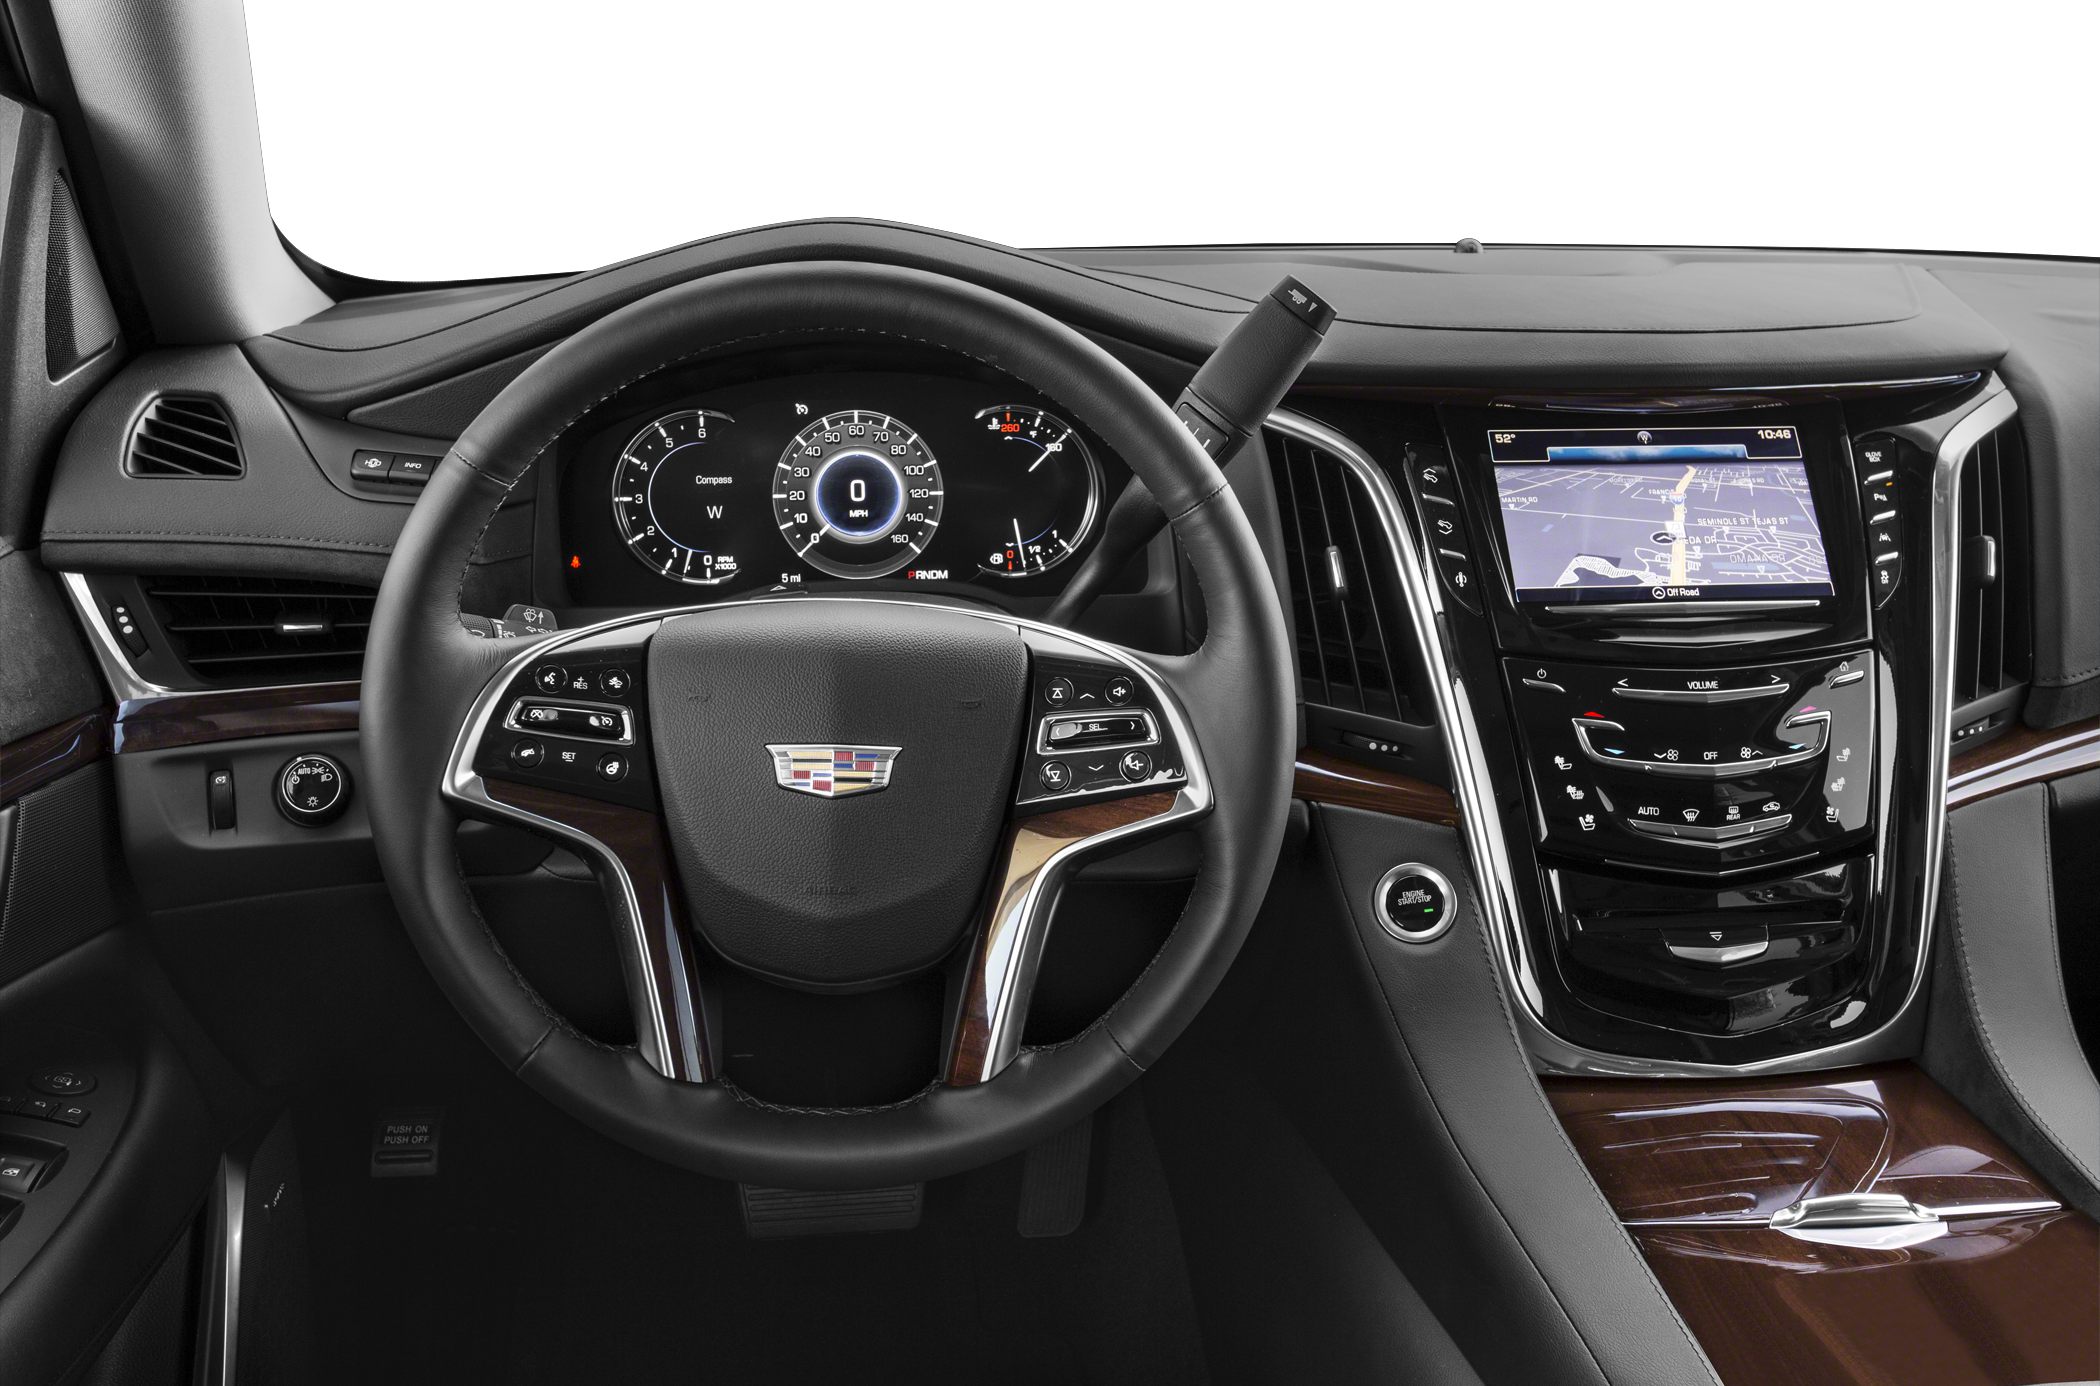 2018 Cadillac Escalade Luxury 4 Dr Sport Utility At